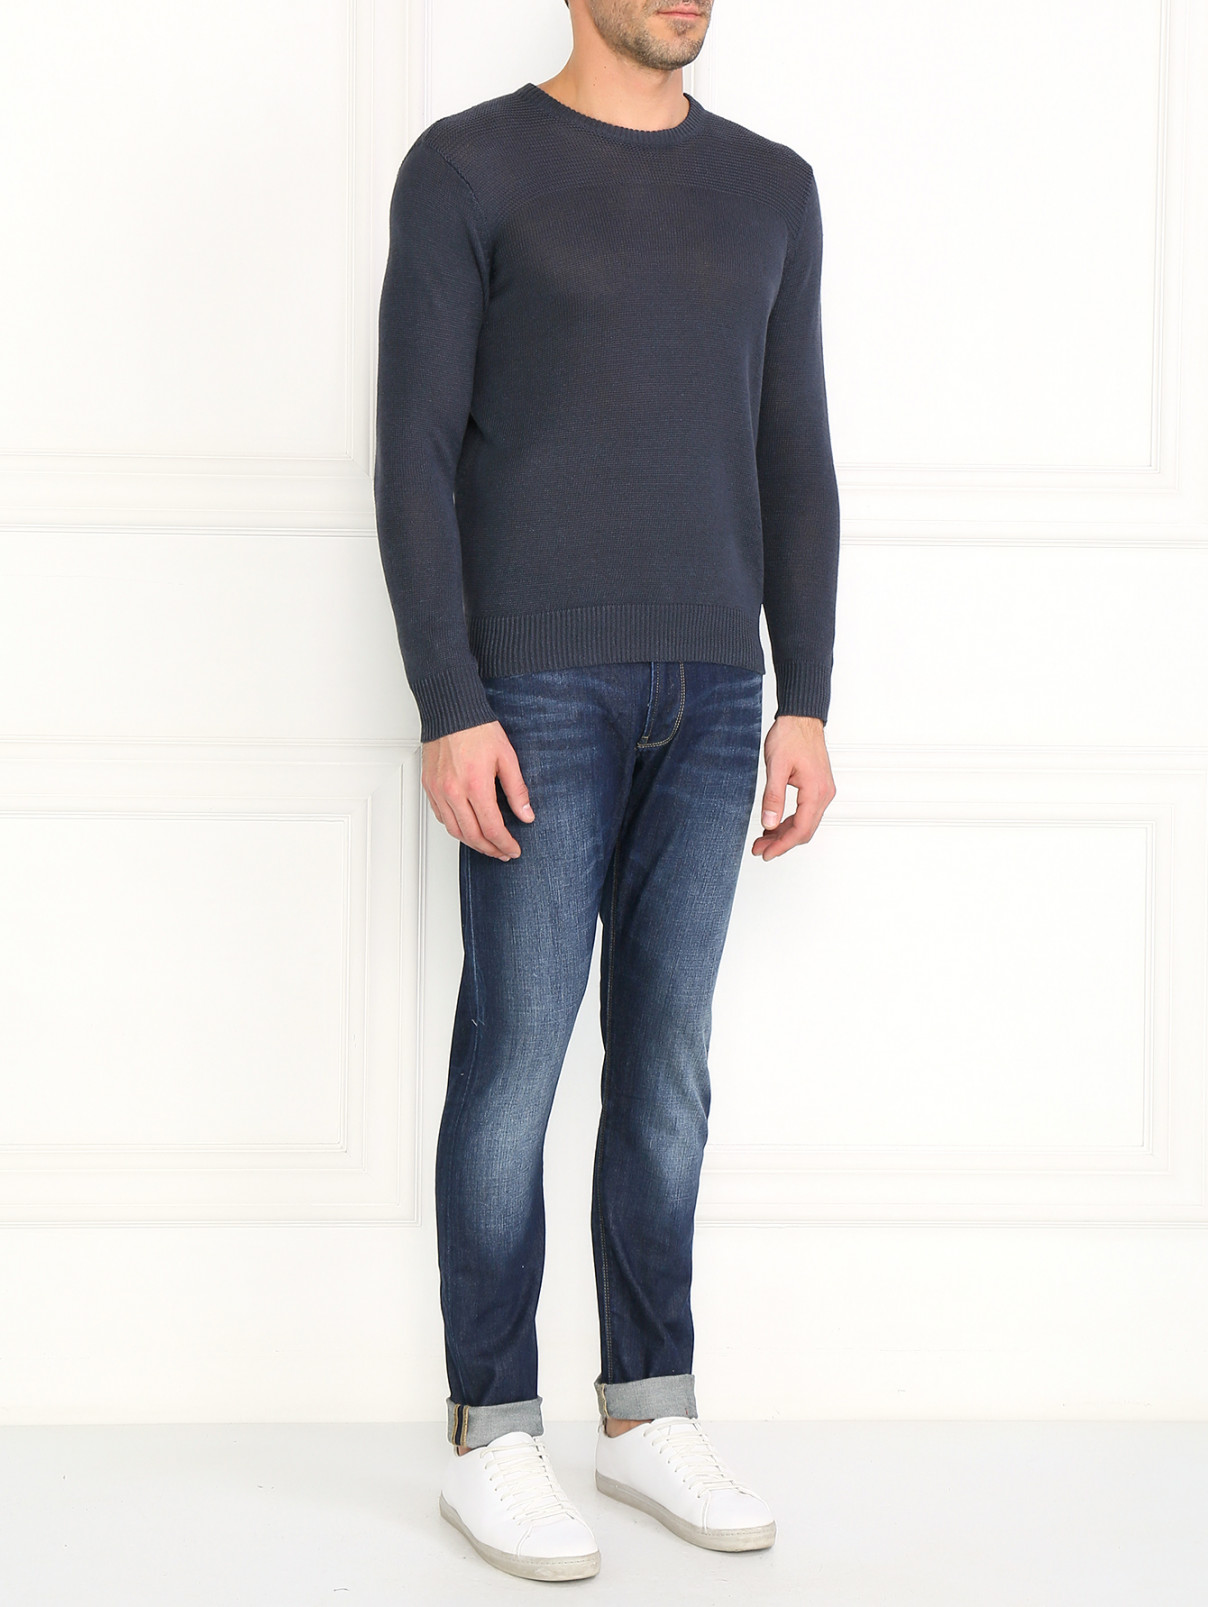 Джемпер из льна свободного кроя Armani Jeans  –  Модель Общий вид  – Цвет:  Синий